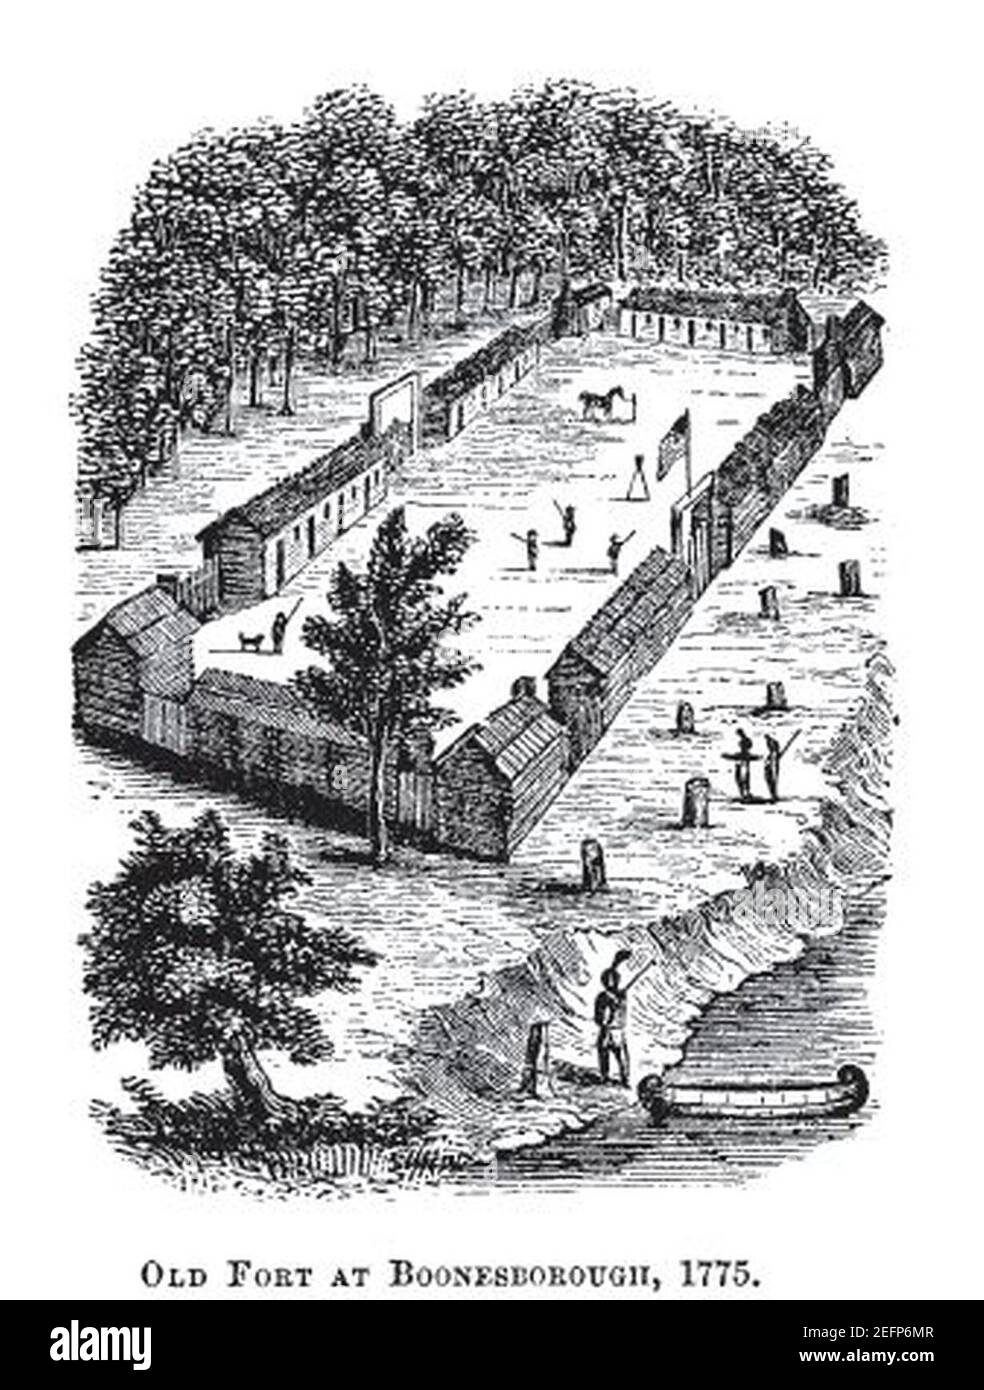 Old Fort at Boonesborough, 1775. Stock Photo